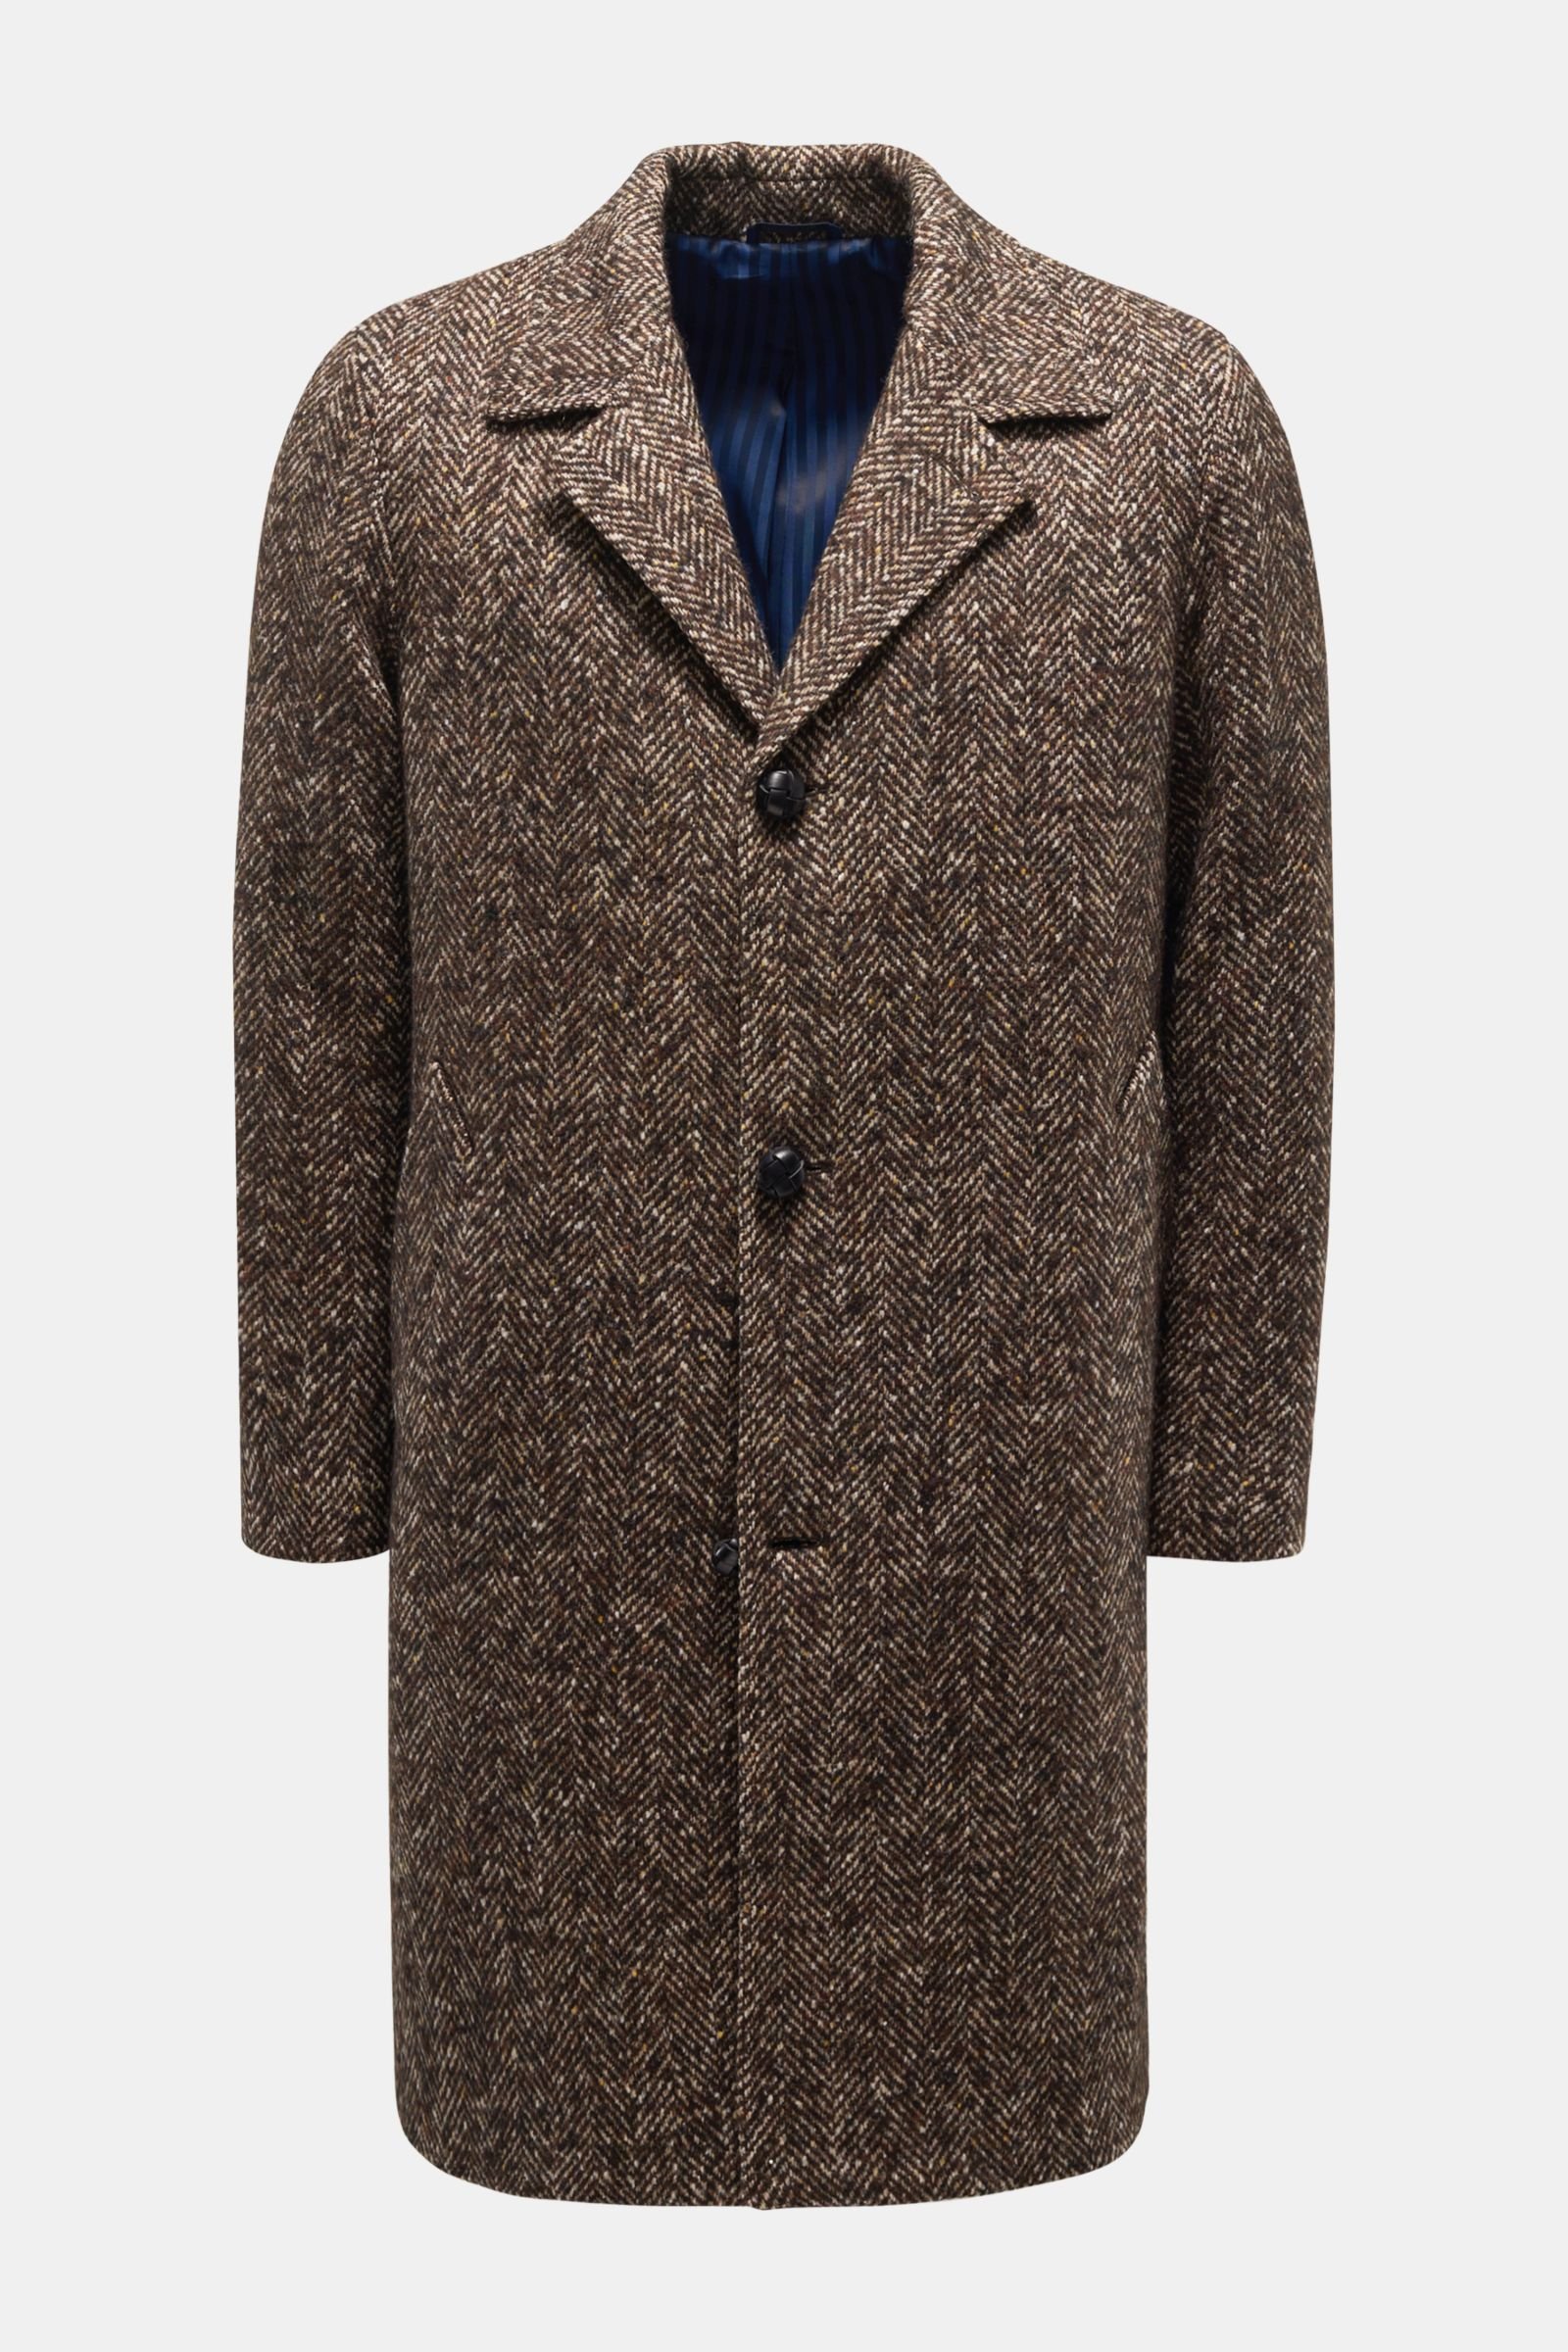 Coat 'Douglas' dark brown/beige patterned